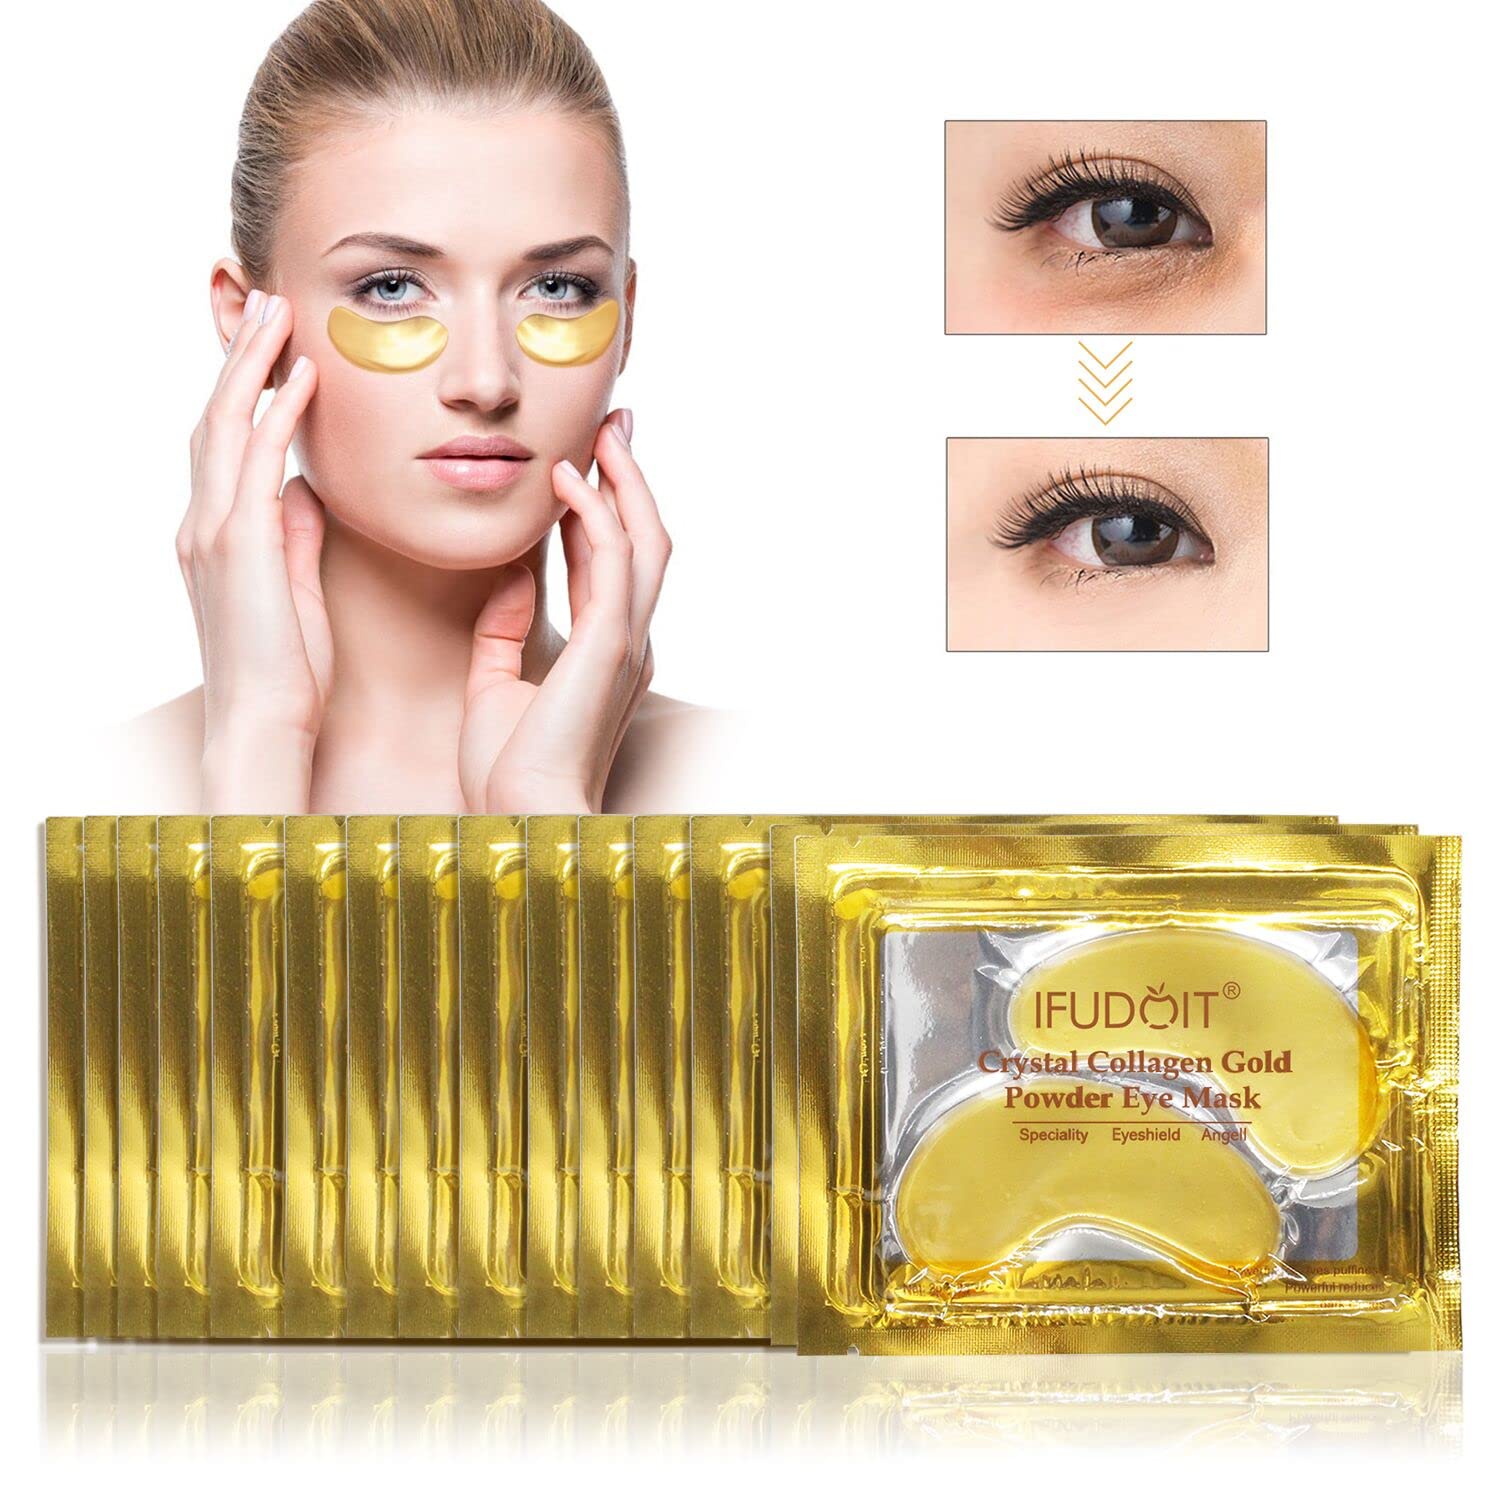 Premium Crystal 24K Gold Powder Gel Collagen Eye Mask 25 Pairs, Eye Treatment Masks for Women and Men, Moisturizing & Hydrating, Anti Aging, Reduce Eye Wrinkles, Eye Bags, Dark Circles, Puffiness